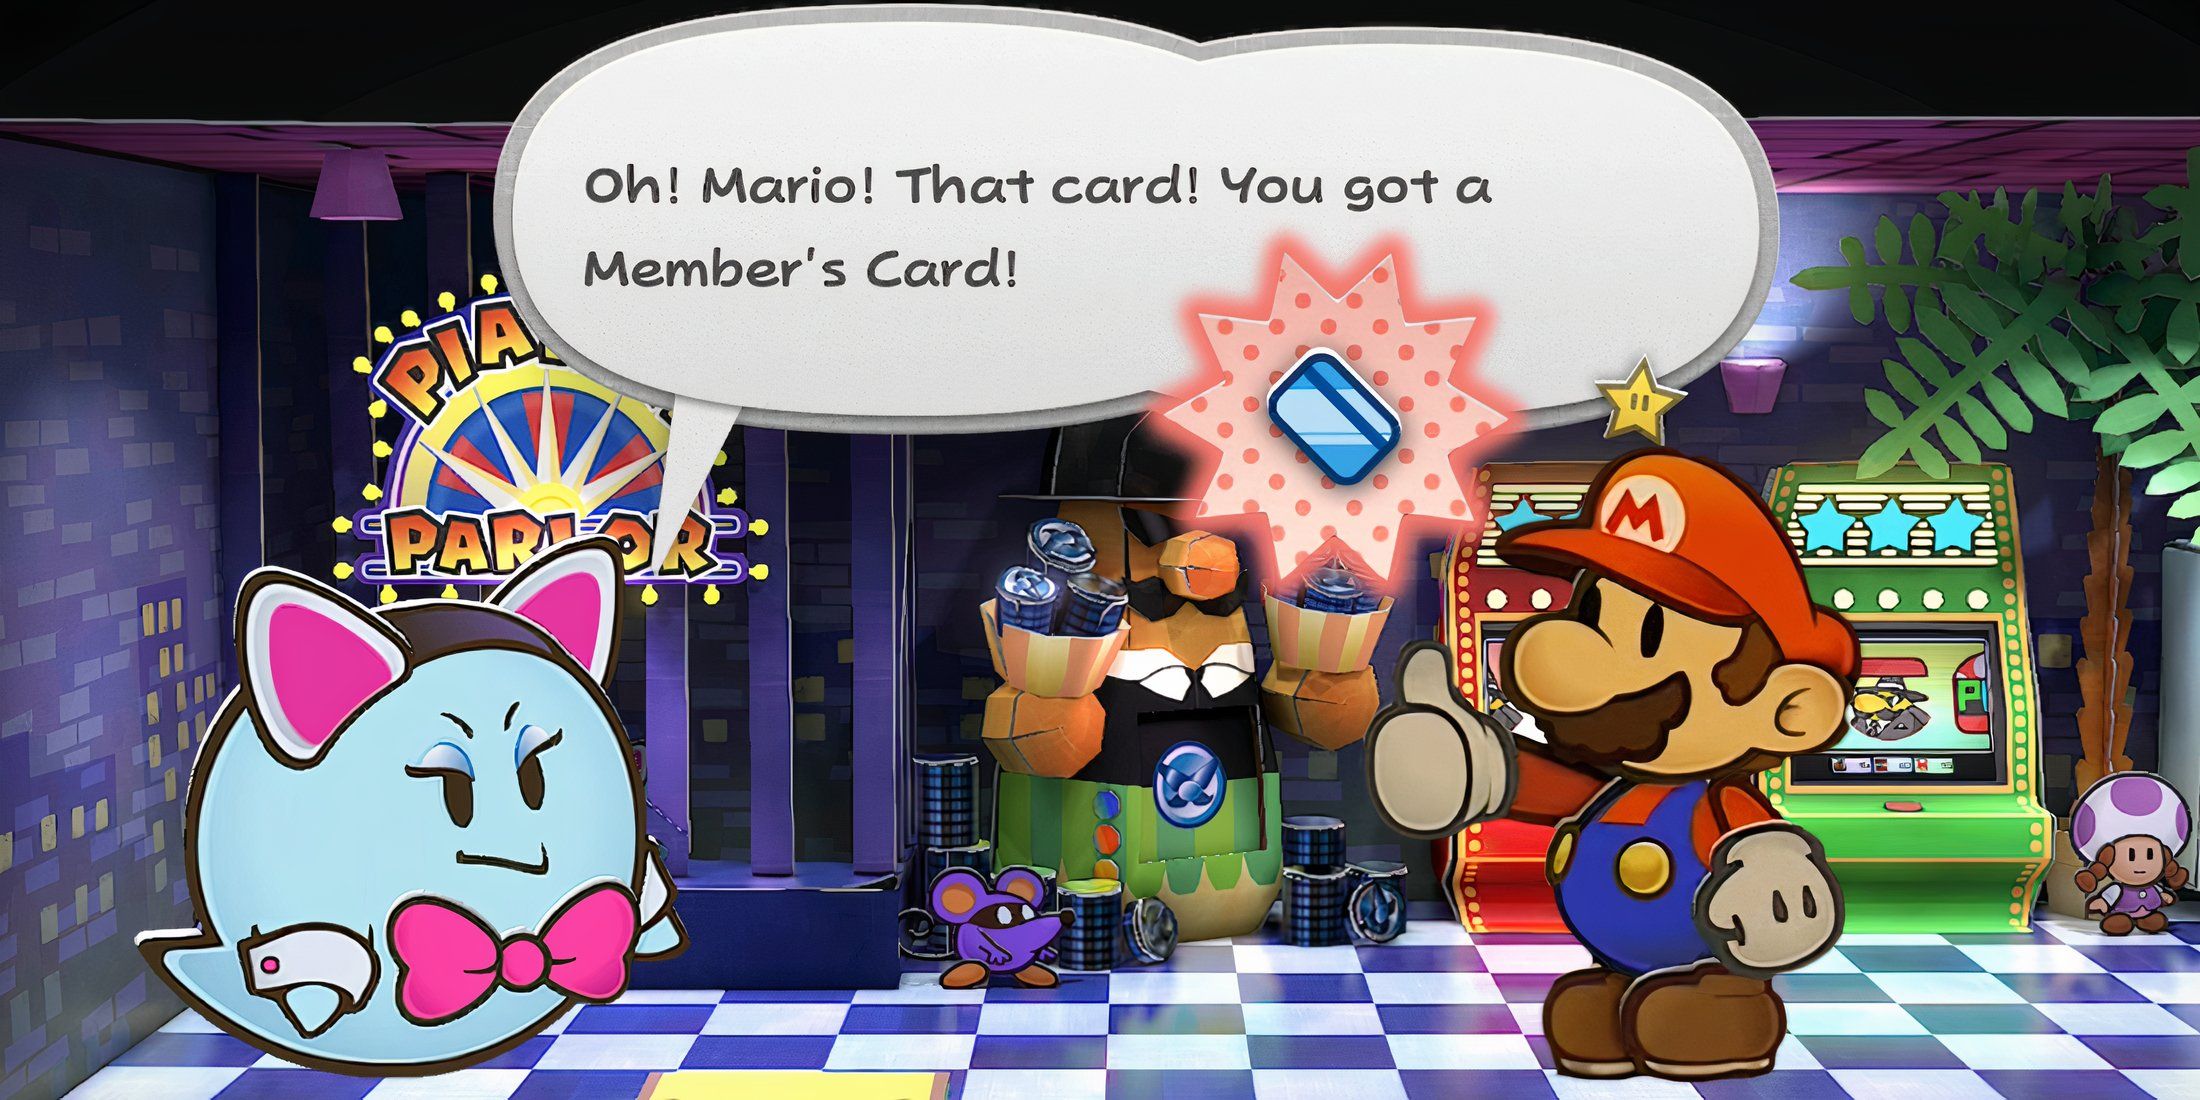 Paper Mario: The Thousand-Year Door - Pianta Parlor Member's Card